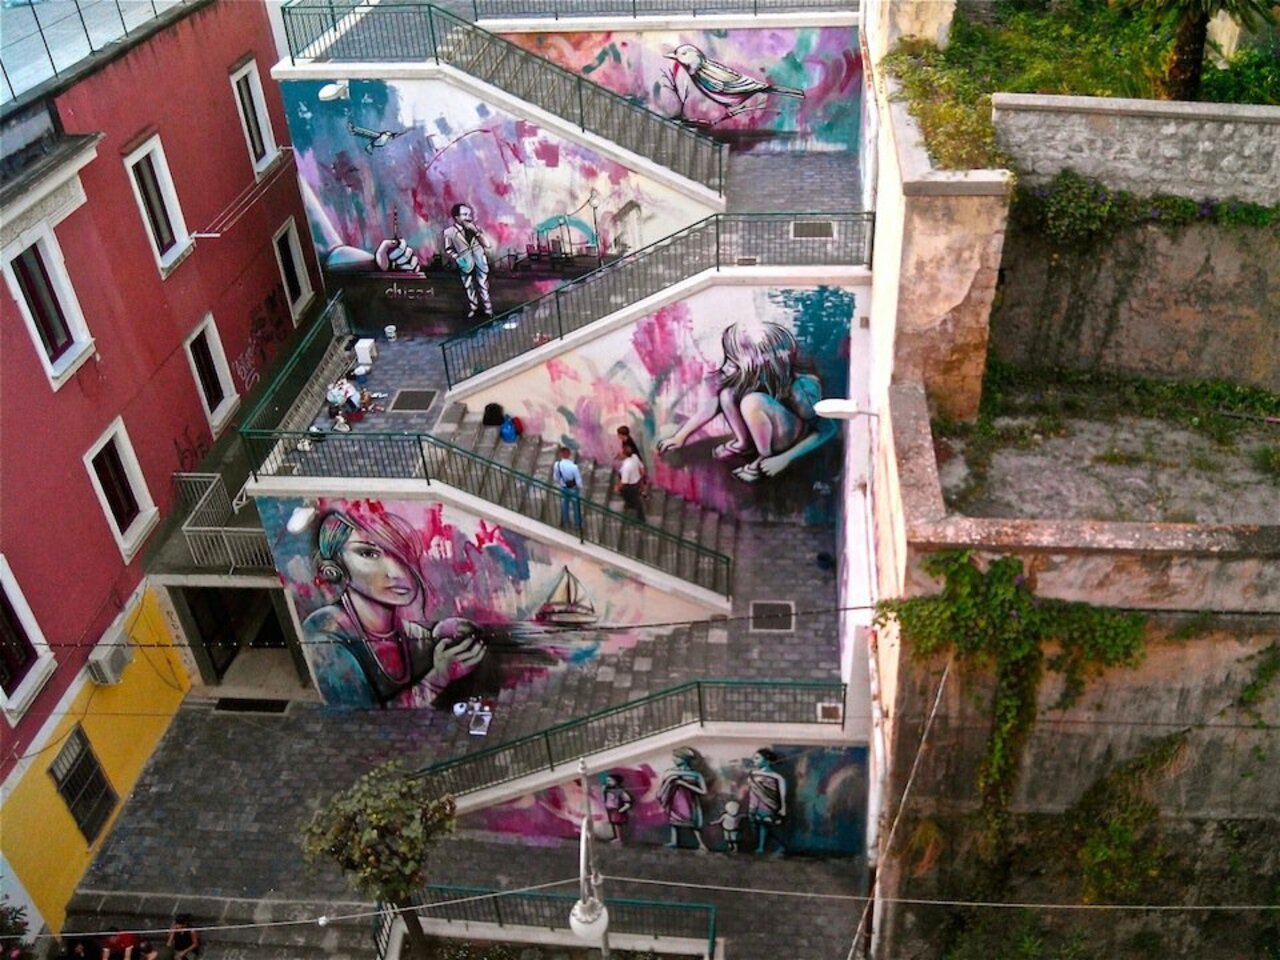 #streetart RT @StreetArt_Graf "Street Art by Alice Pasquini - In Salerno, Italy
#mural #art #graffiti http://t.co/UJ10PfN5R3"